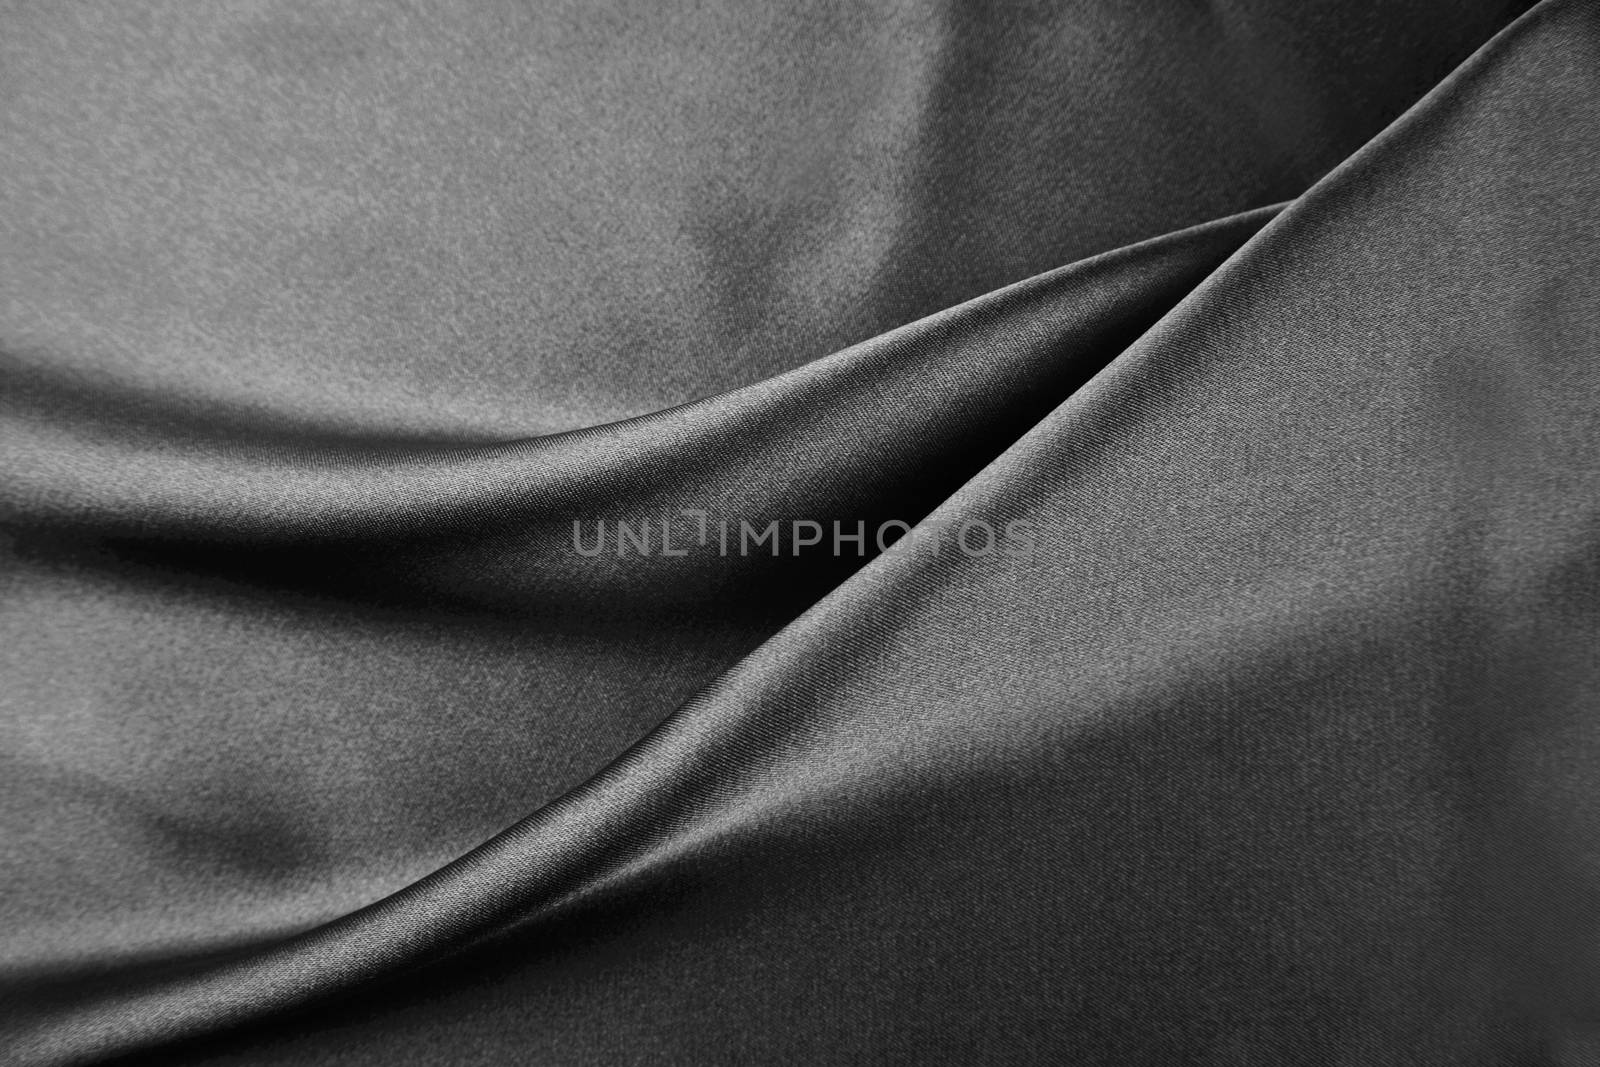 Closeup of rippled silk fabric